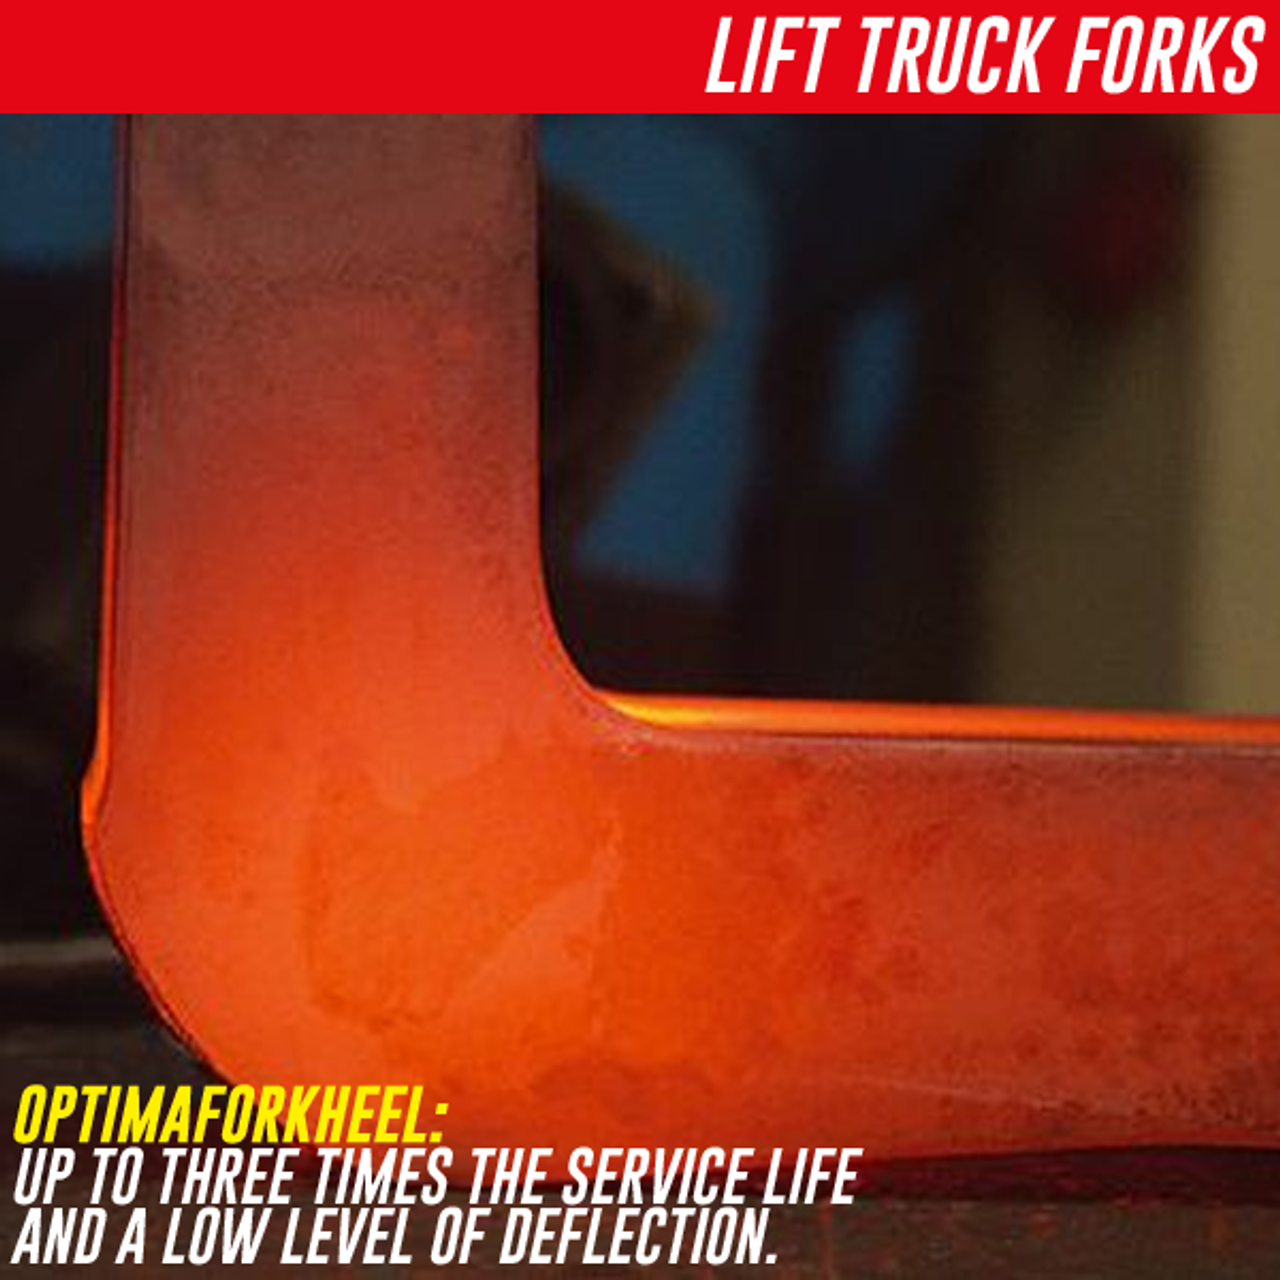 IMP15065137041271: 54" x 6" x 2.5" Forklift Forks